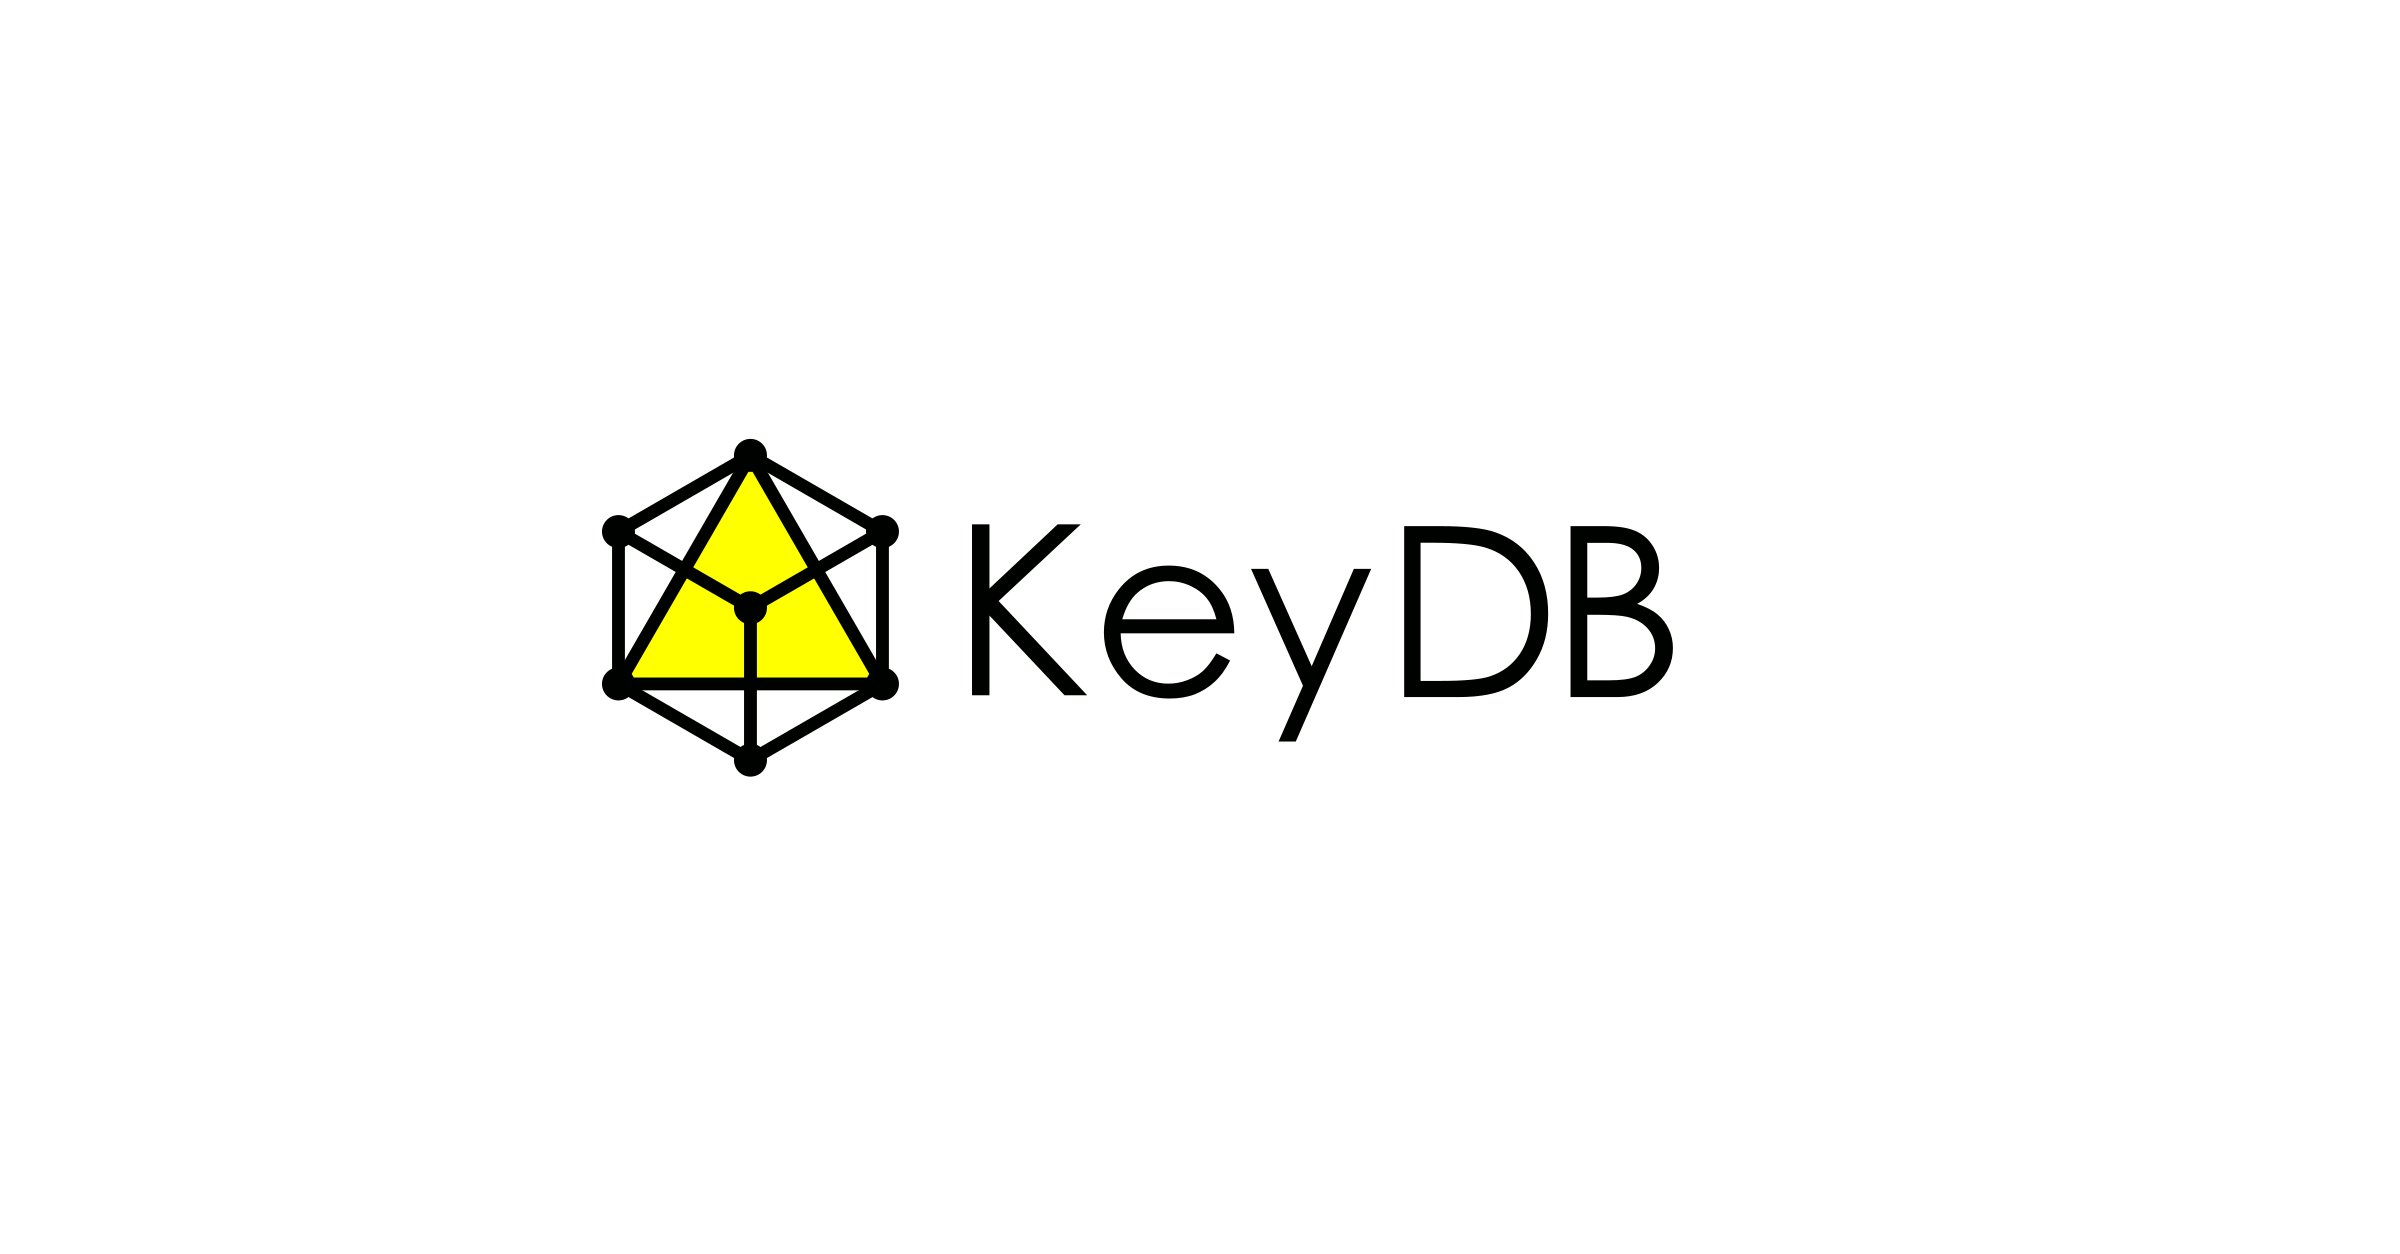 Snap ผู้สร้าง Snapchat เข้าซื้อบริษัท KeyDB ผู้สร้างฐานข้อมูลทดแทน Redis ที่เริ่มโครงการมาตั้งแต่ปี 2019 และหลังรวมบริษัท KeyDB จะเปิดเวอร์ชั่นเพื่อการค้าทั้งหมดออกมาเป็นโอเพนซอร์ส